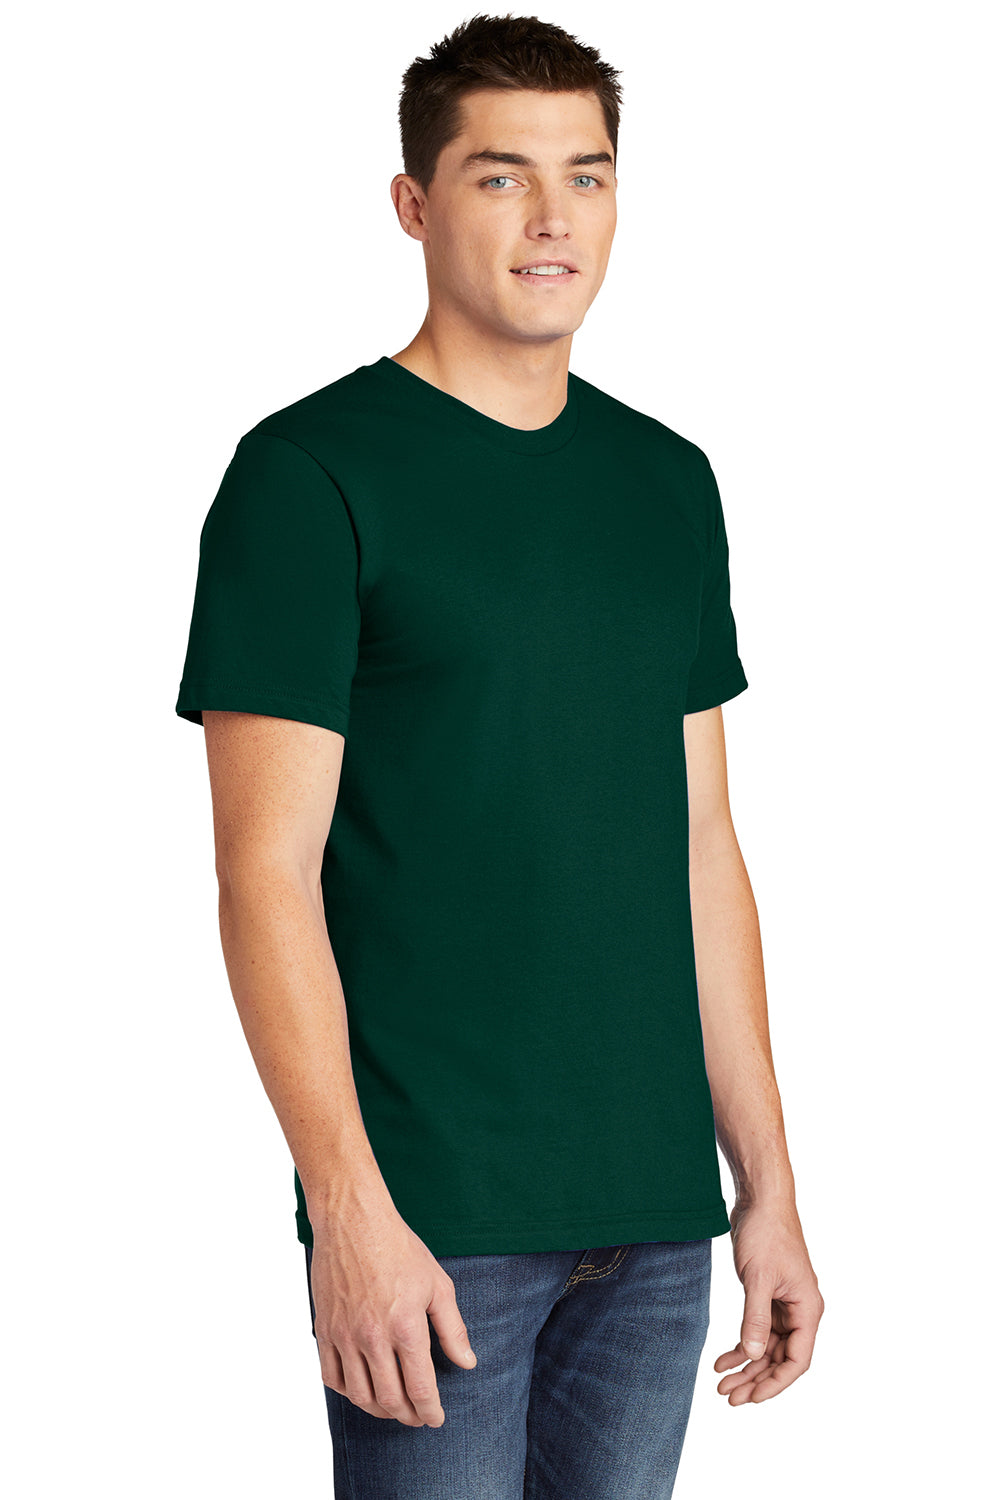 American Apparel 2001 Mens Fine Jersey Short Sleeve Crewneck T-Shirt Forest Green Model 3Q